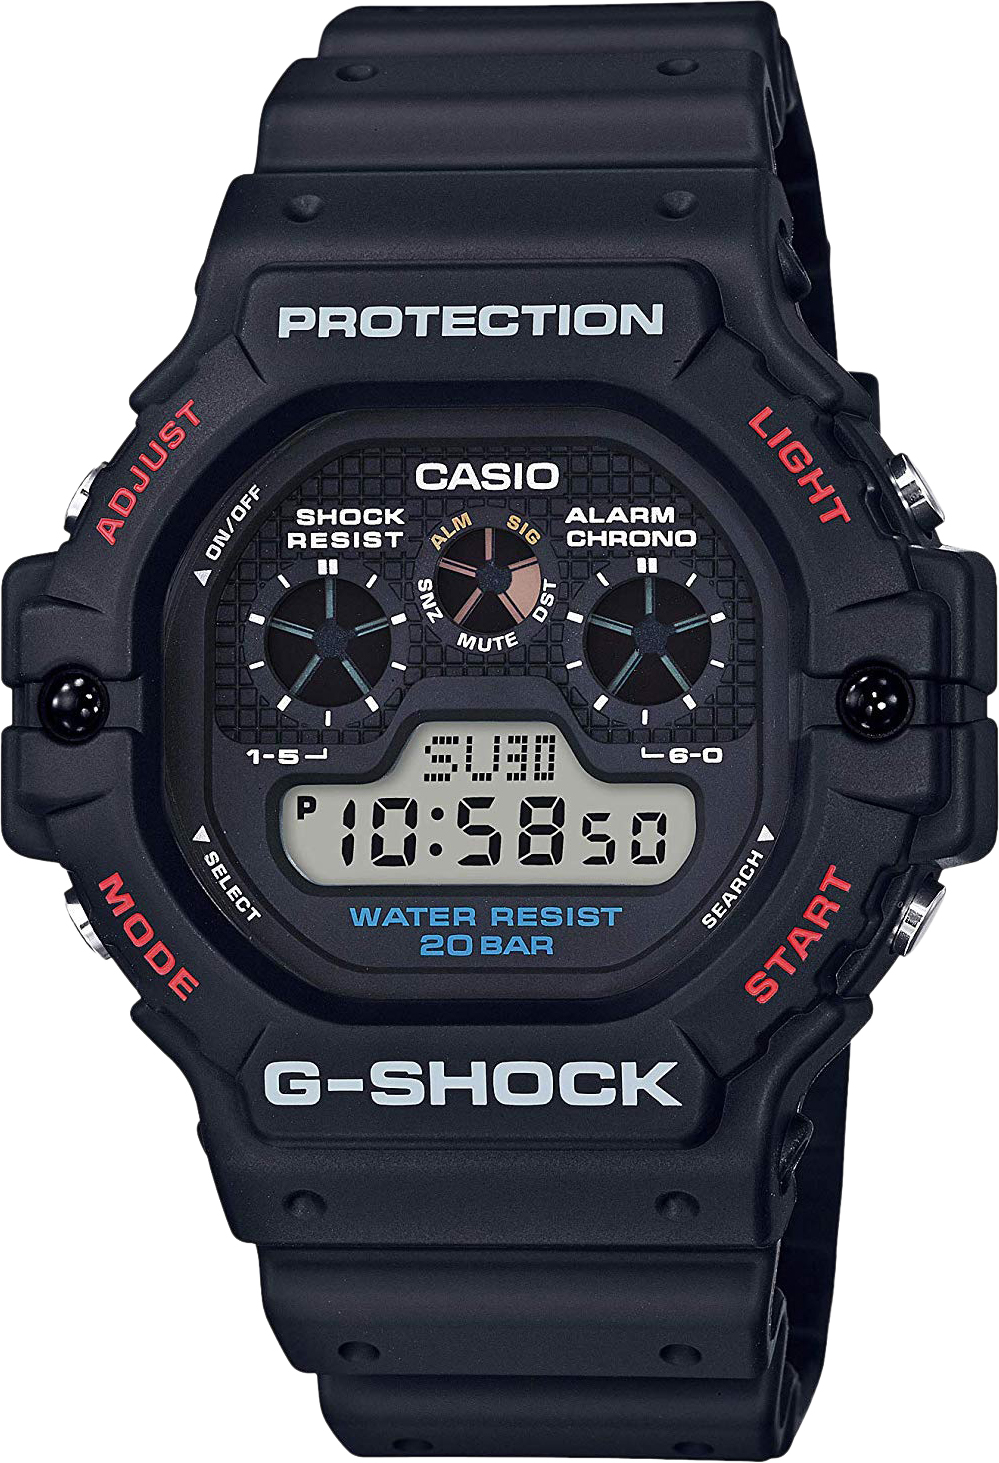    Casio G-SHOCK DW-5900-1E  